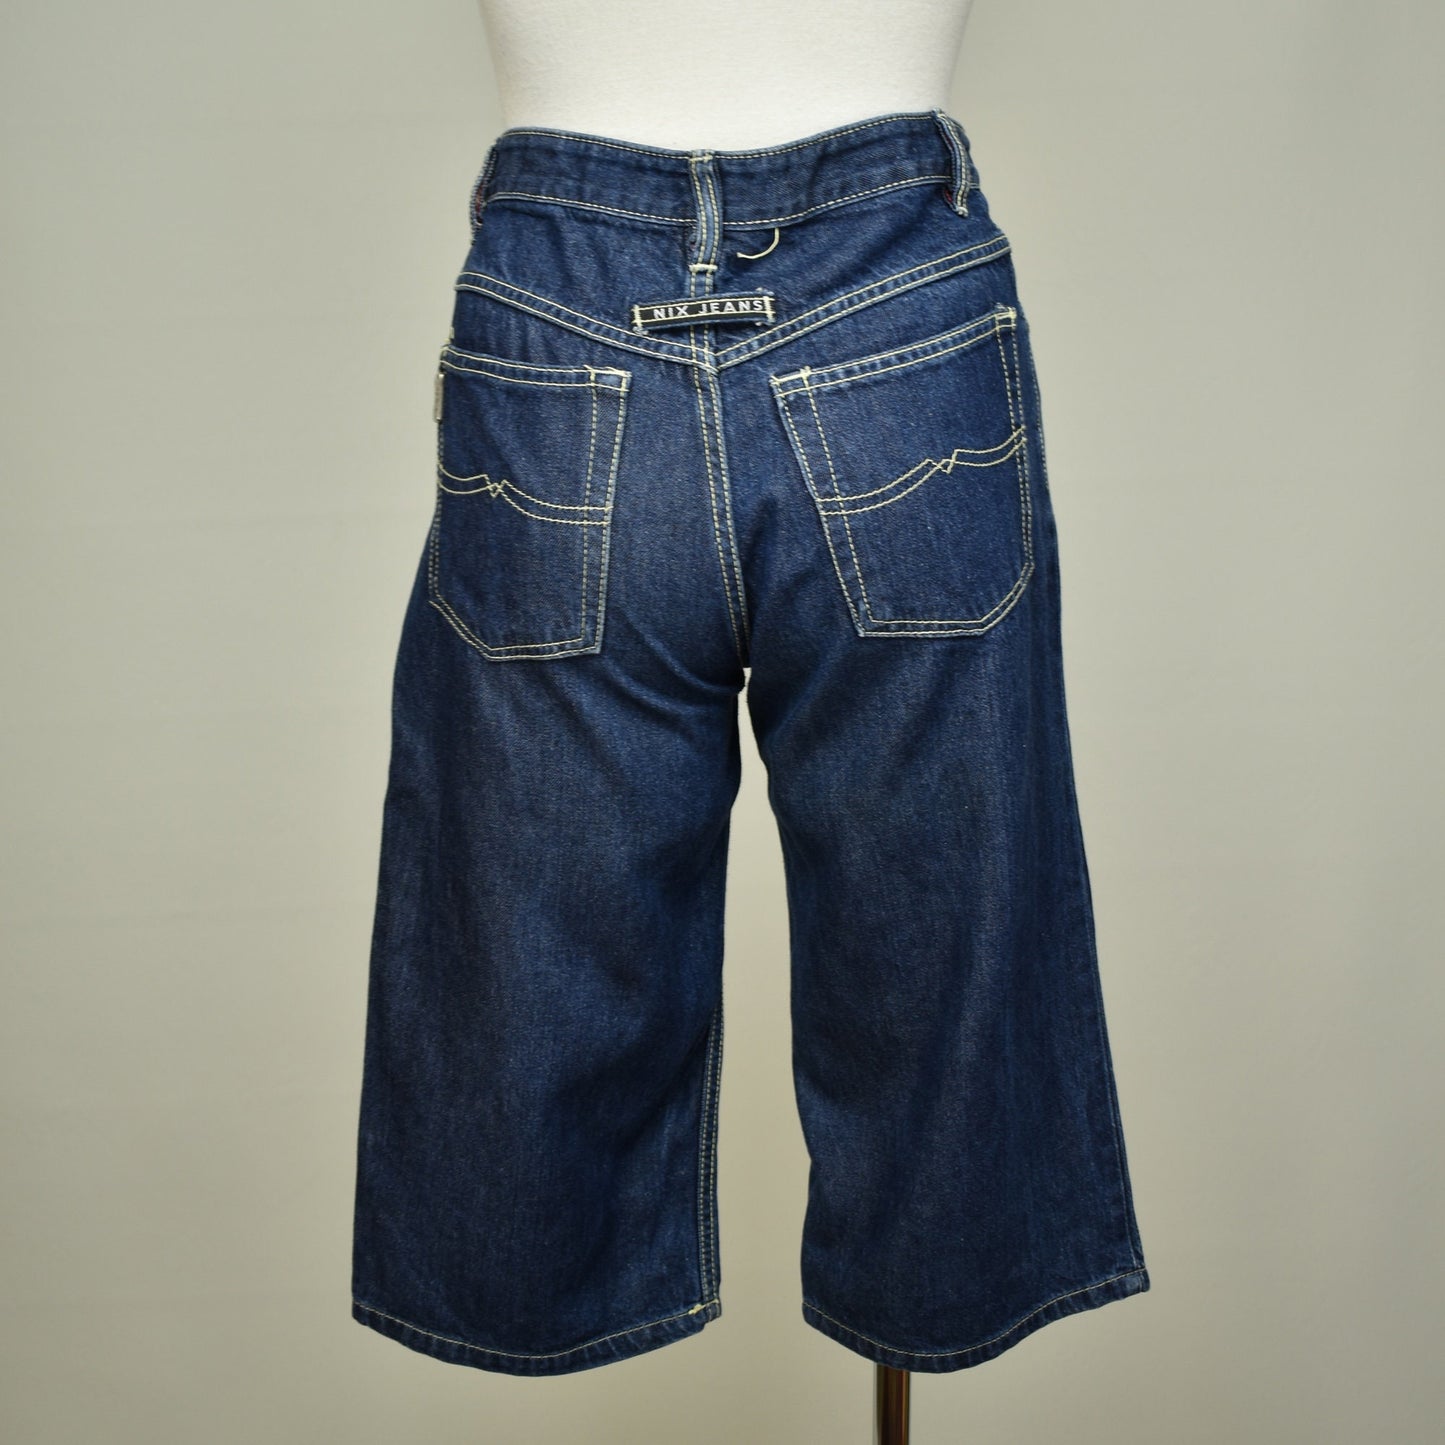 Vintage Long Denim Shorts by Nix - Clam Diggers - Jorts - Jean Shorts